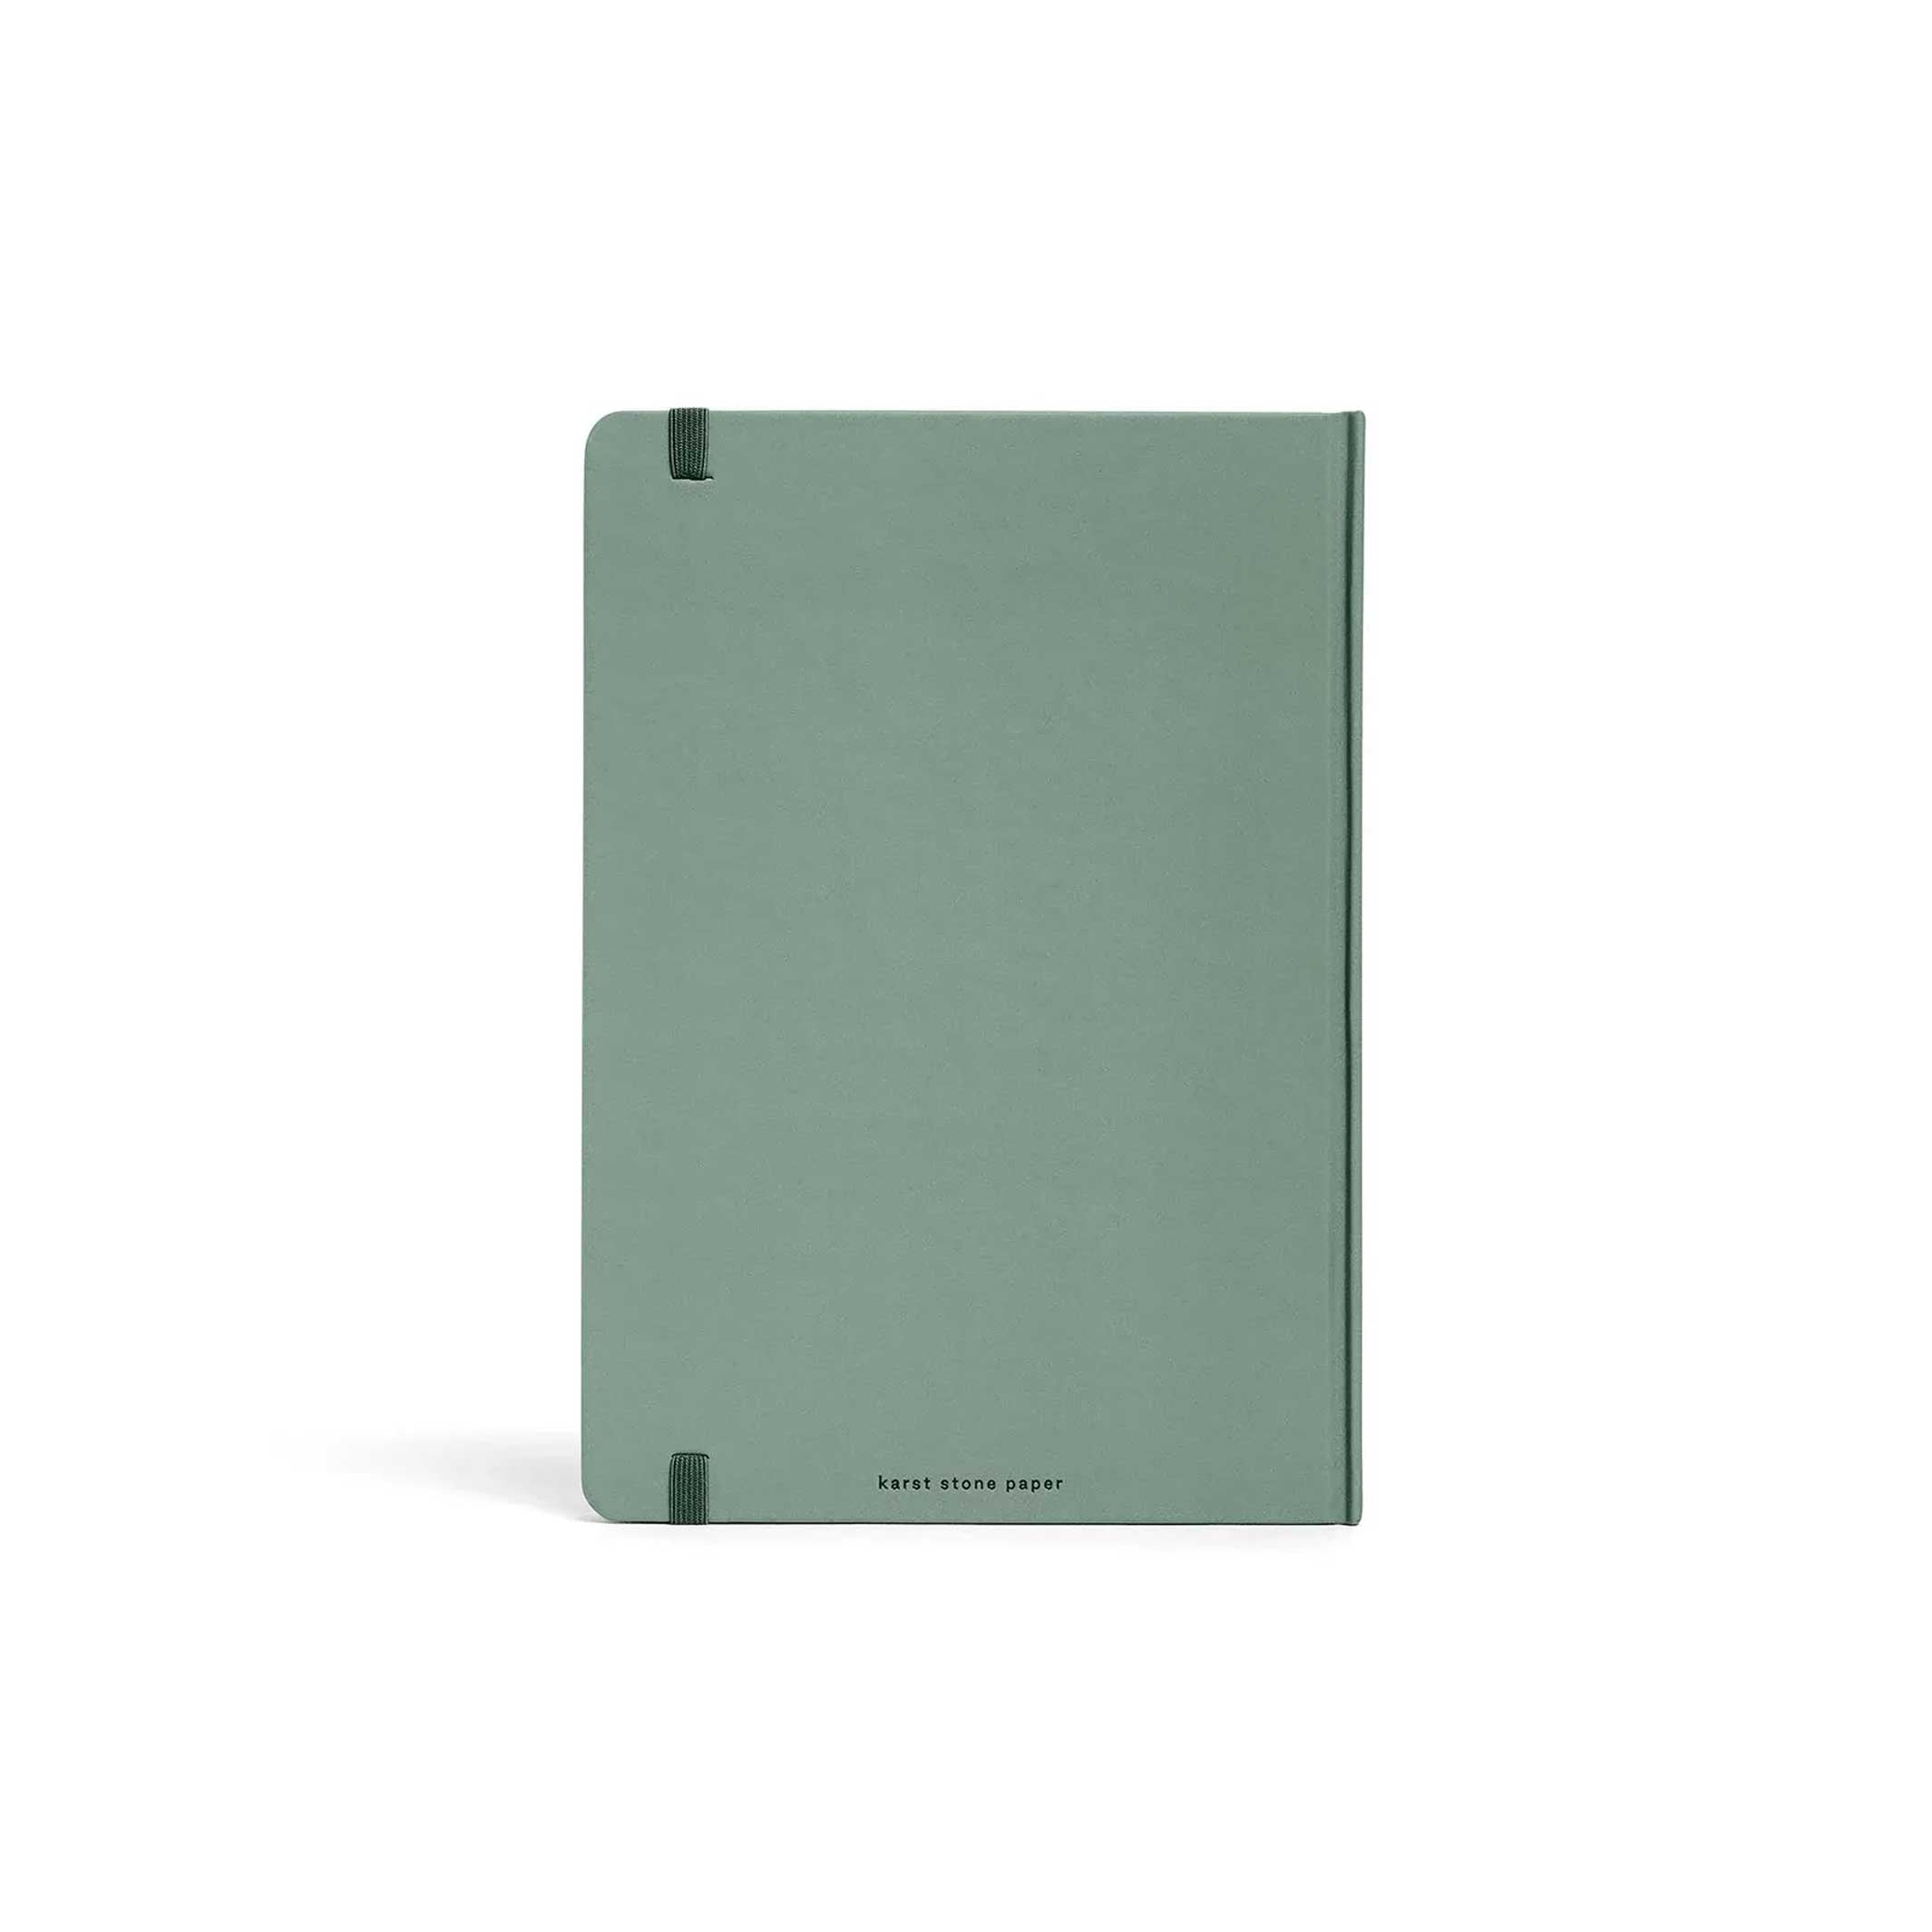 Hardcover NOTEBOOK A5 | Eukalyptus-grünes NOTIZBUCH | Karst Stone Paper